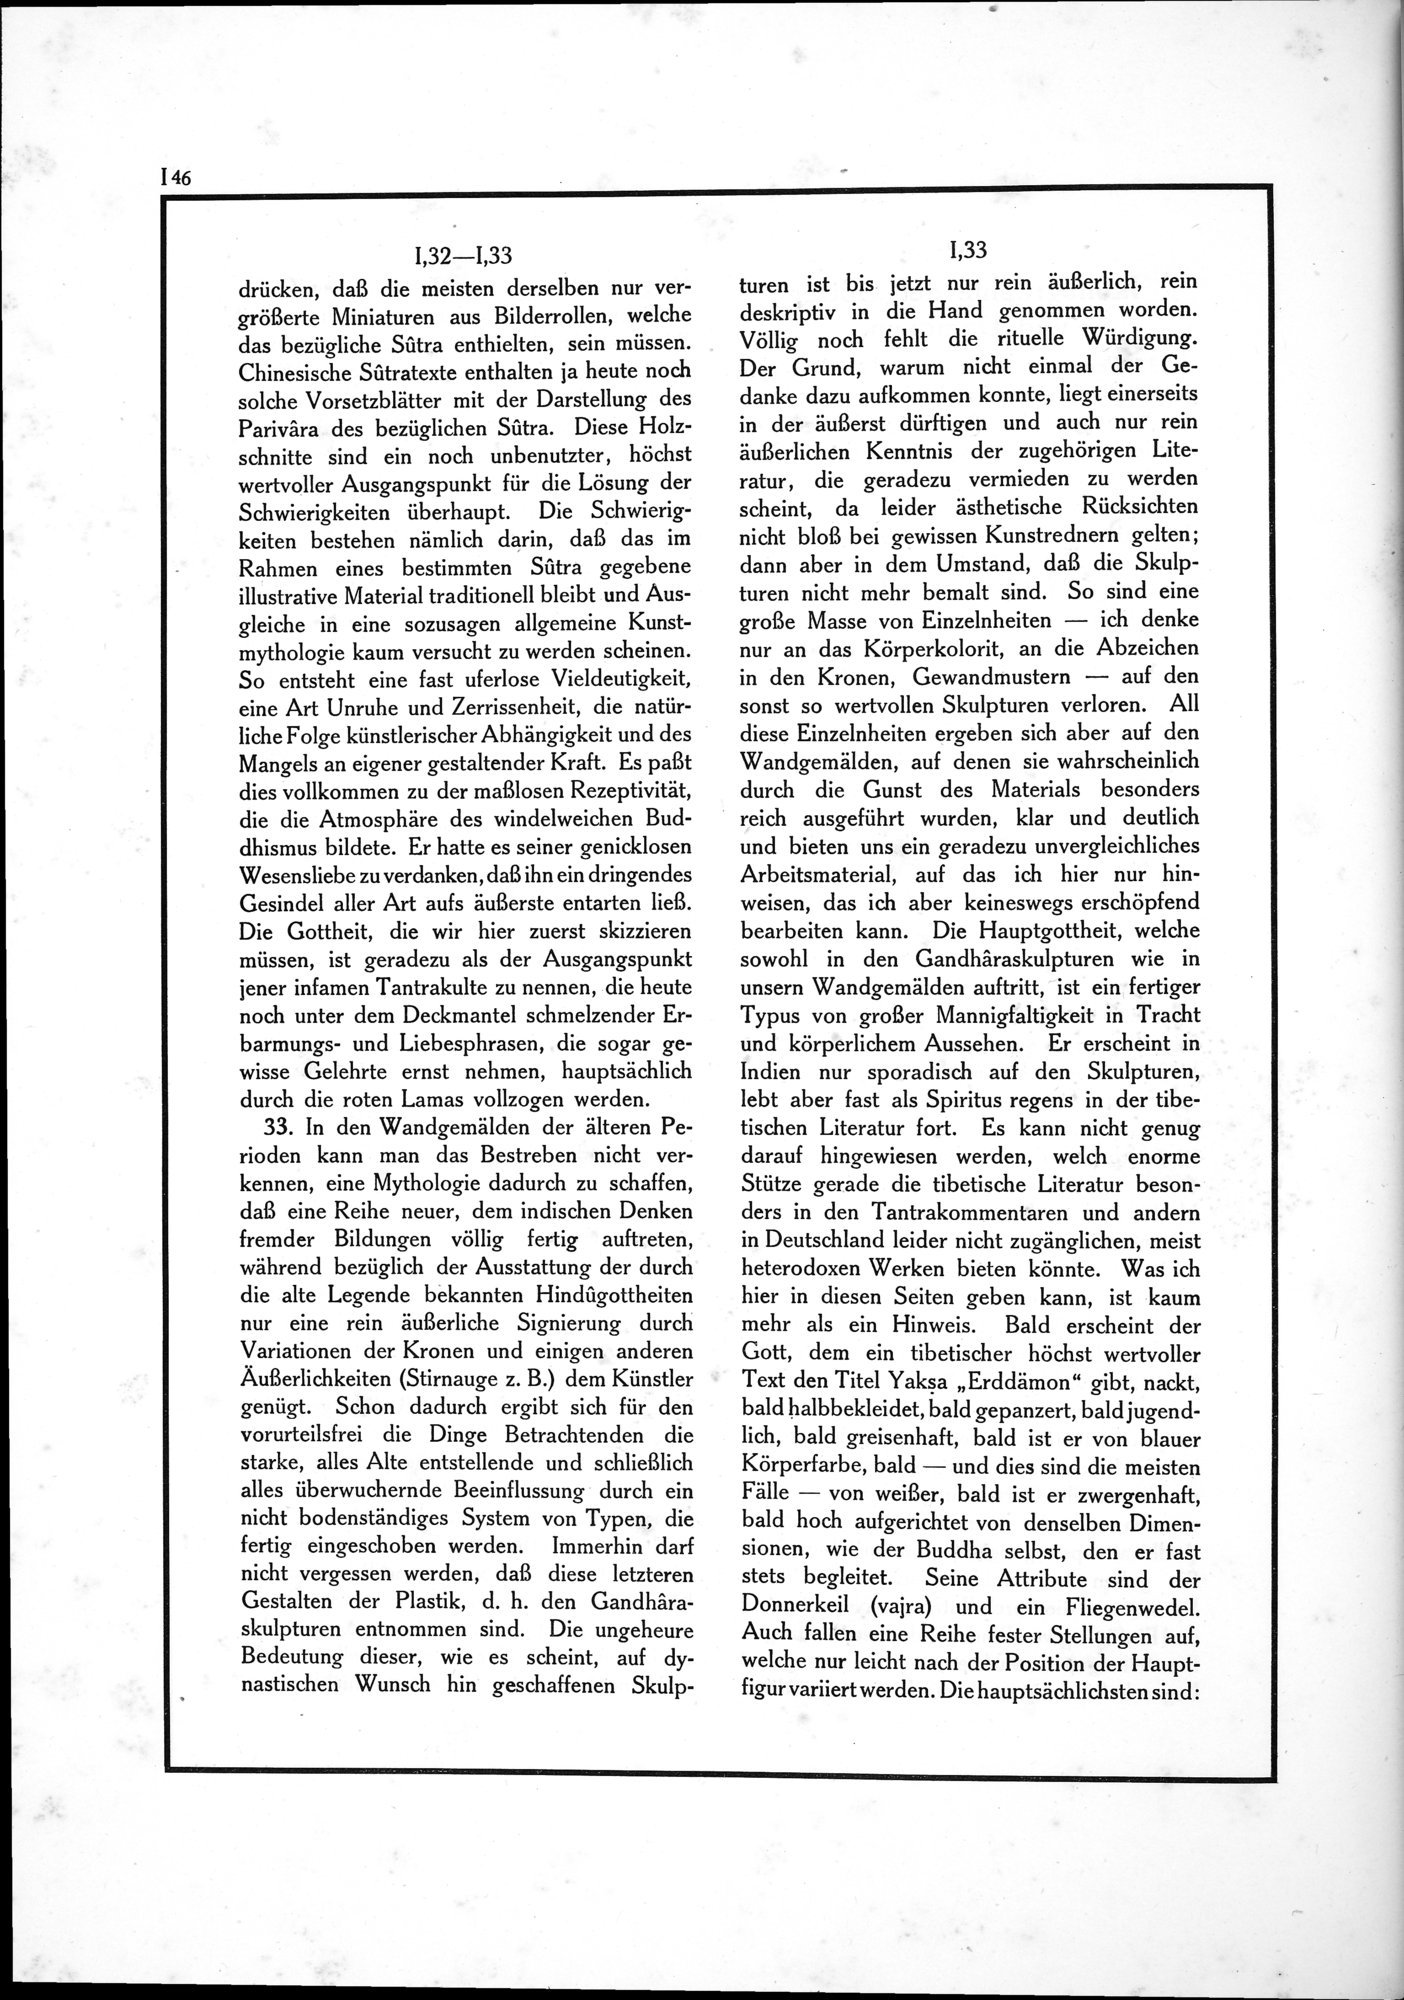 Alt-Kutscha : vol.1 / Page 58 (Grayscale High Resolution Image)